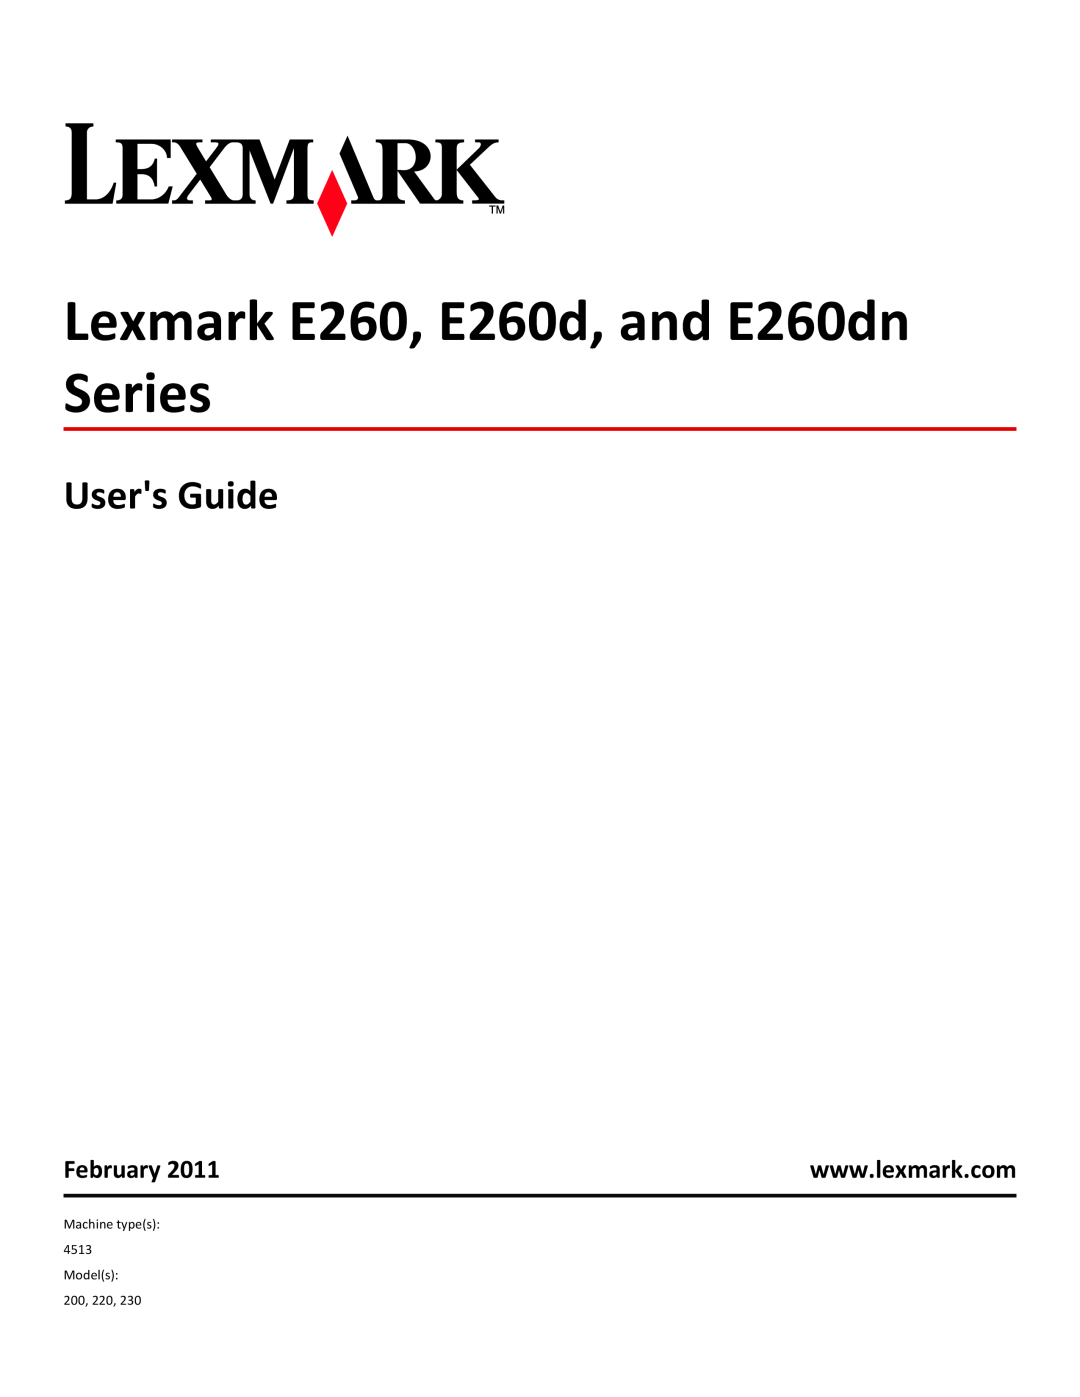 Lexmark 34S0305, 34S0100, 34S0300, 34S5164 manual Users Guide, February, Lexmark E260, E260d, and E260dn Series 